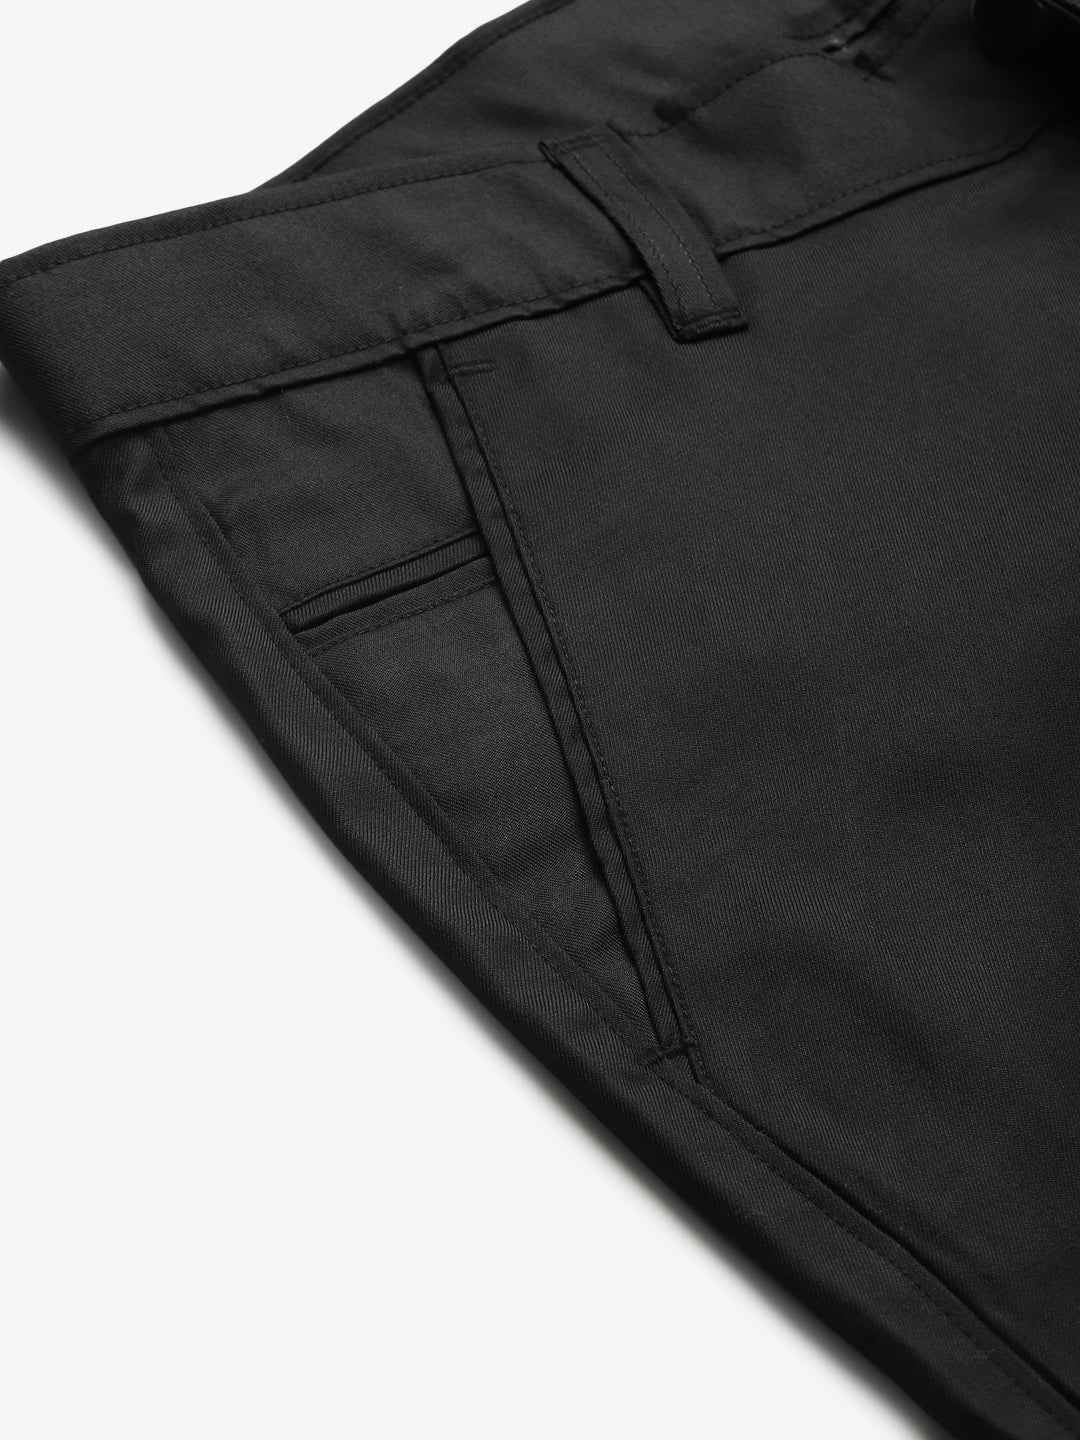 Men's Cotton Blend Black Solid Casual Trouser - Sojanya